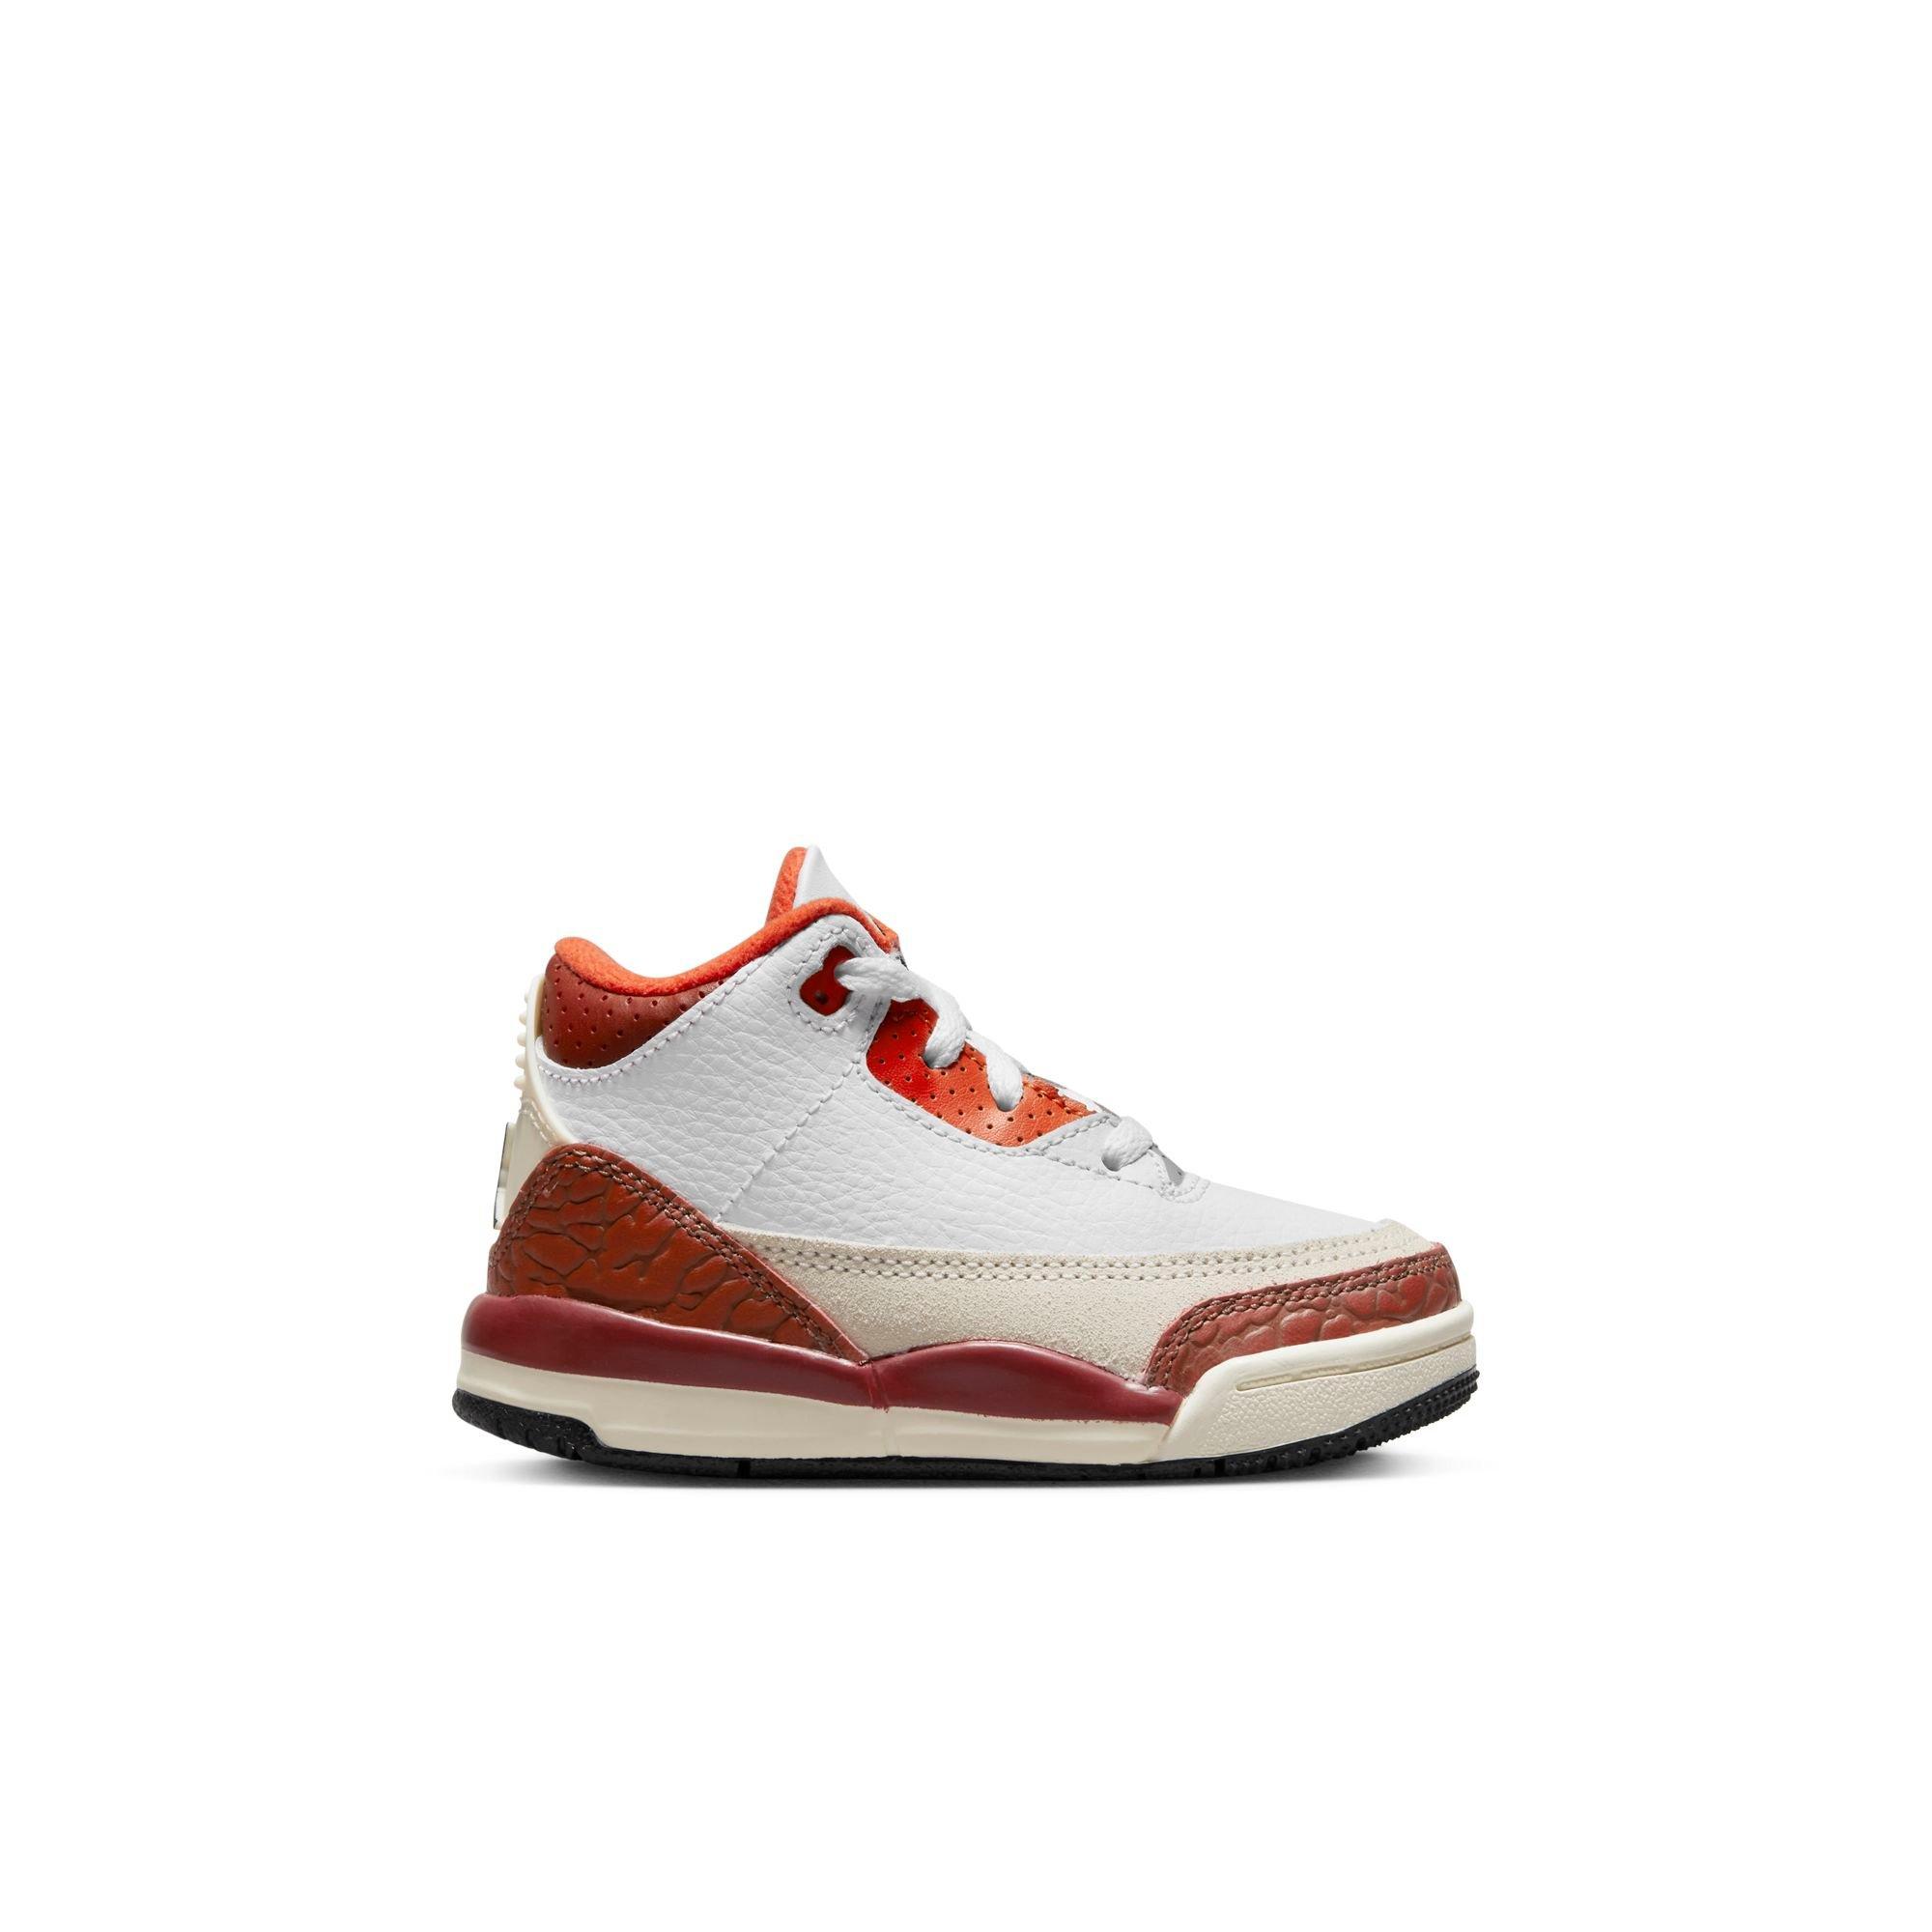 Jordan Son of Mars: Black - Varsity Red - Another Look - Air Jordans,  Release Dates & More